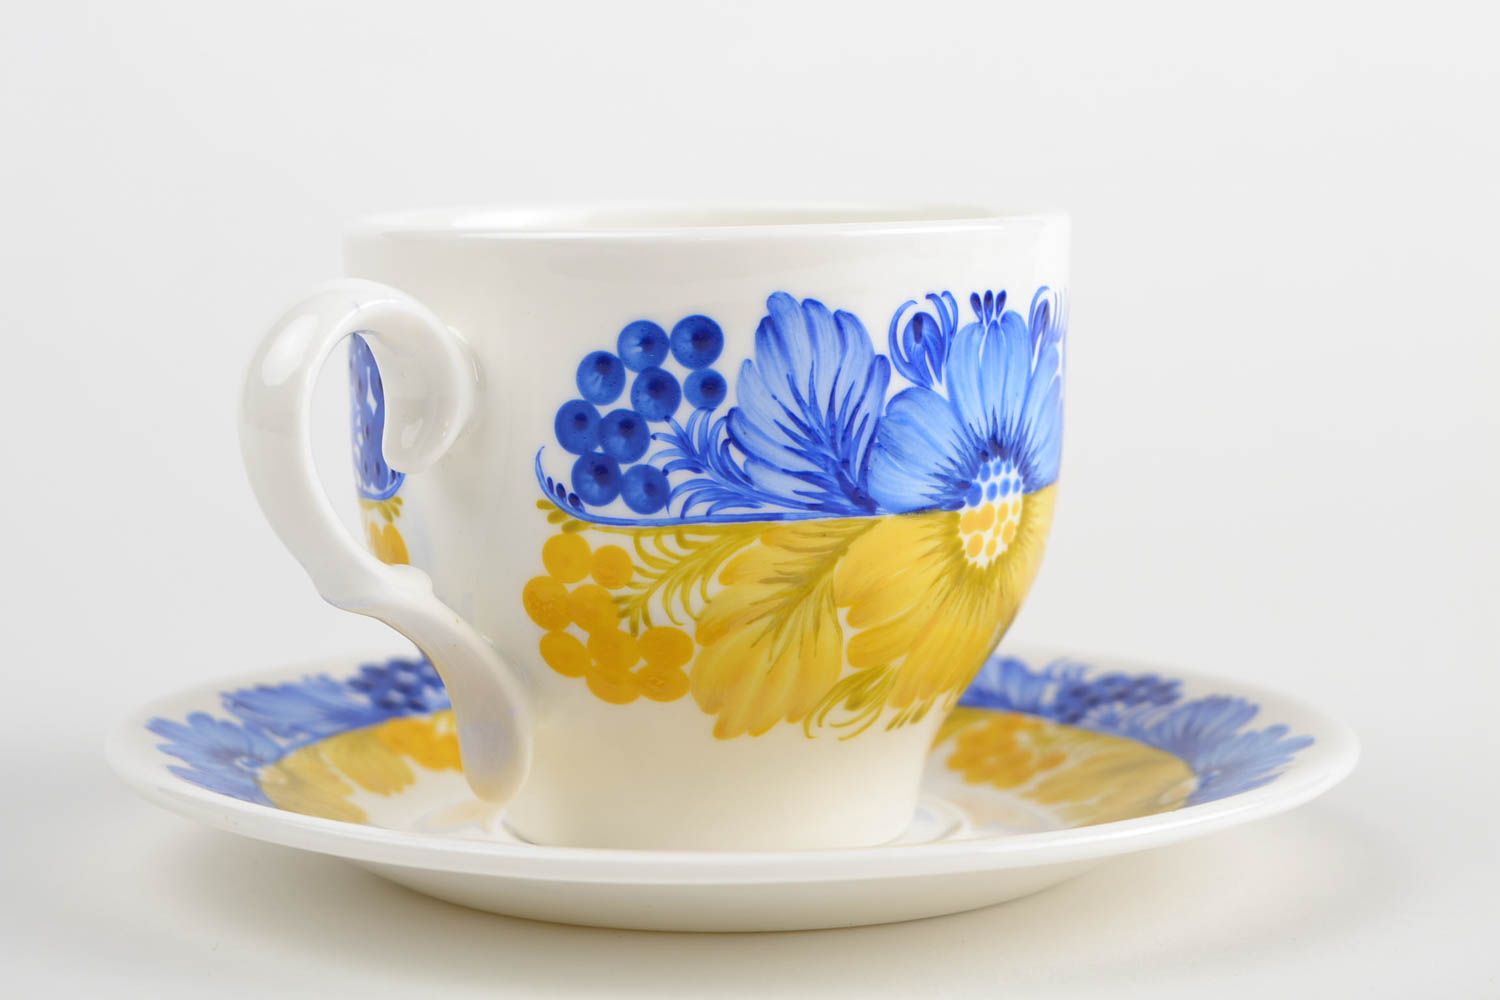 Elegant porcelain teacup in Ukrainian flag colors - yellow and blue photo 4